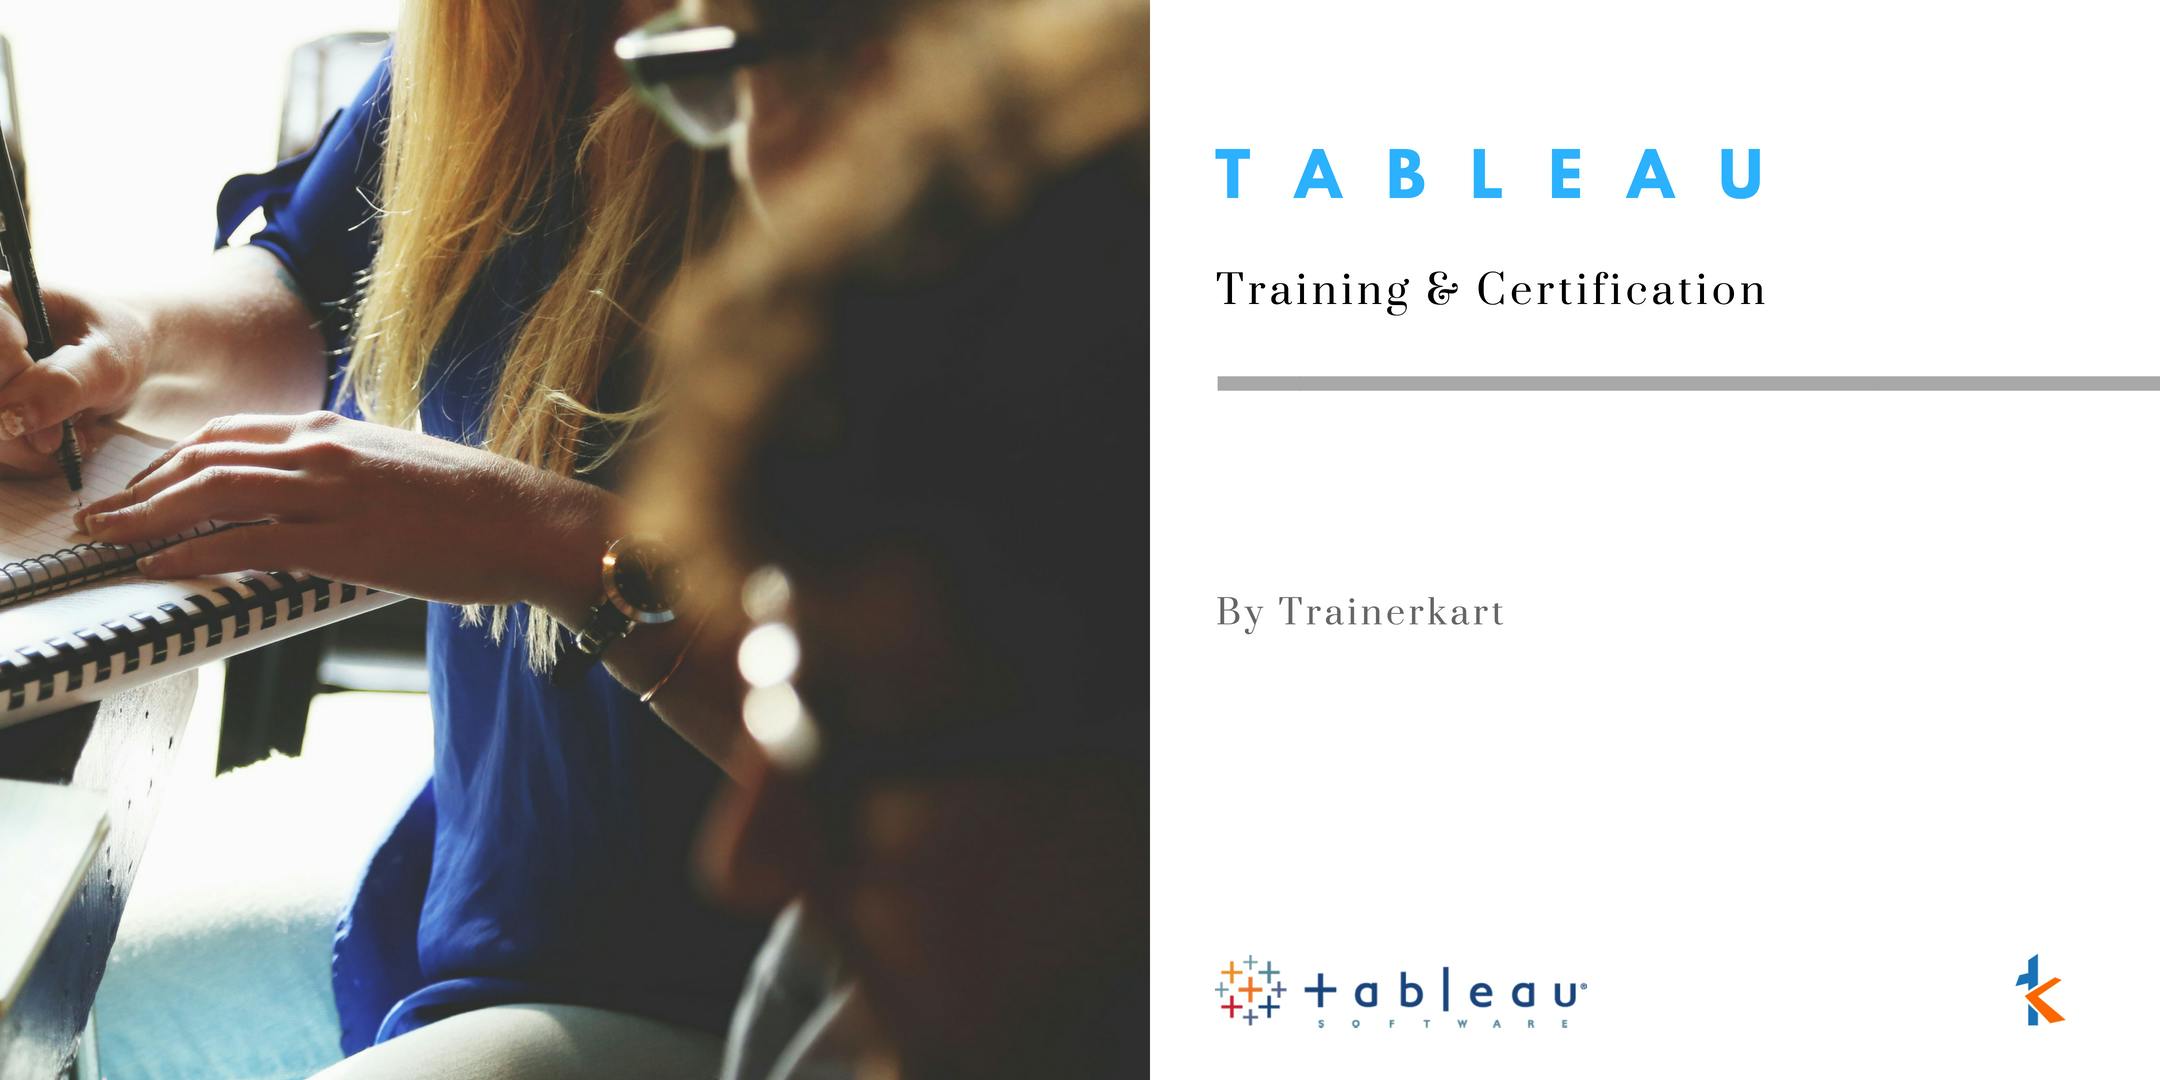 Tableau Classroom Training & Certification in Birmingham, AL